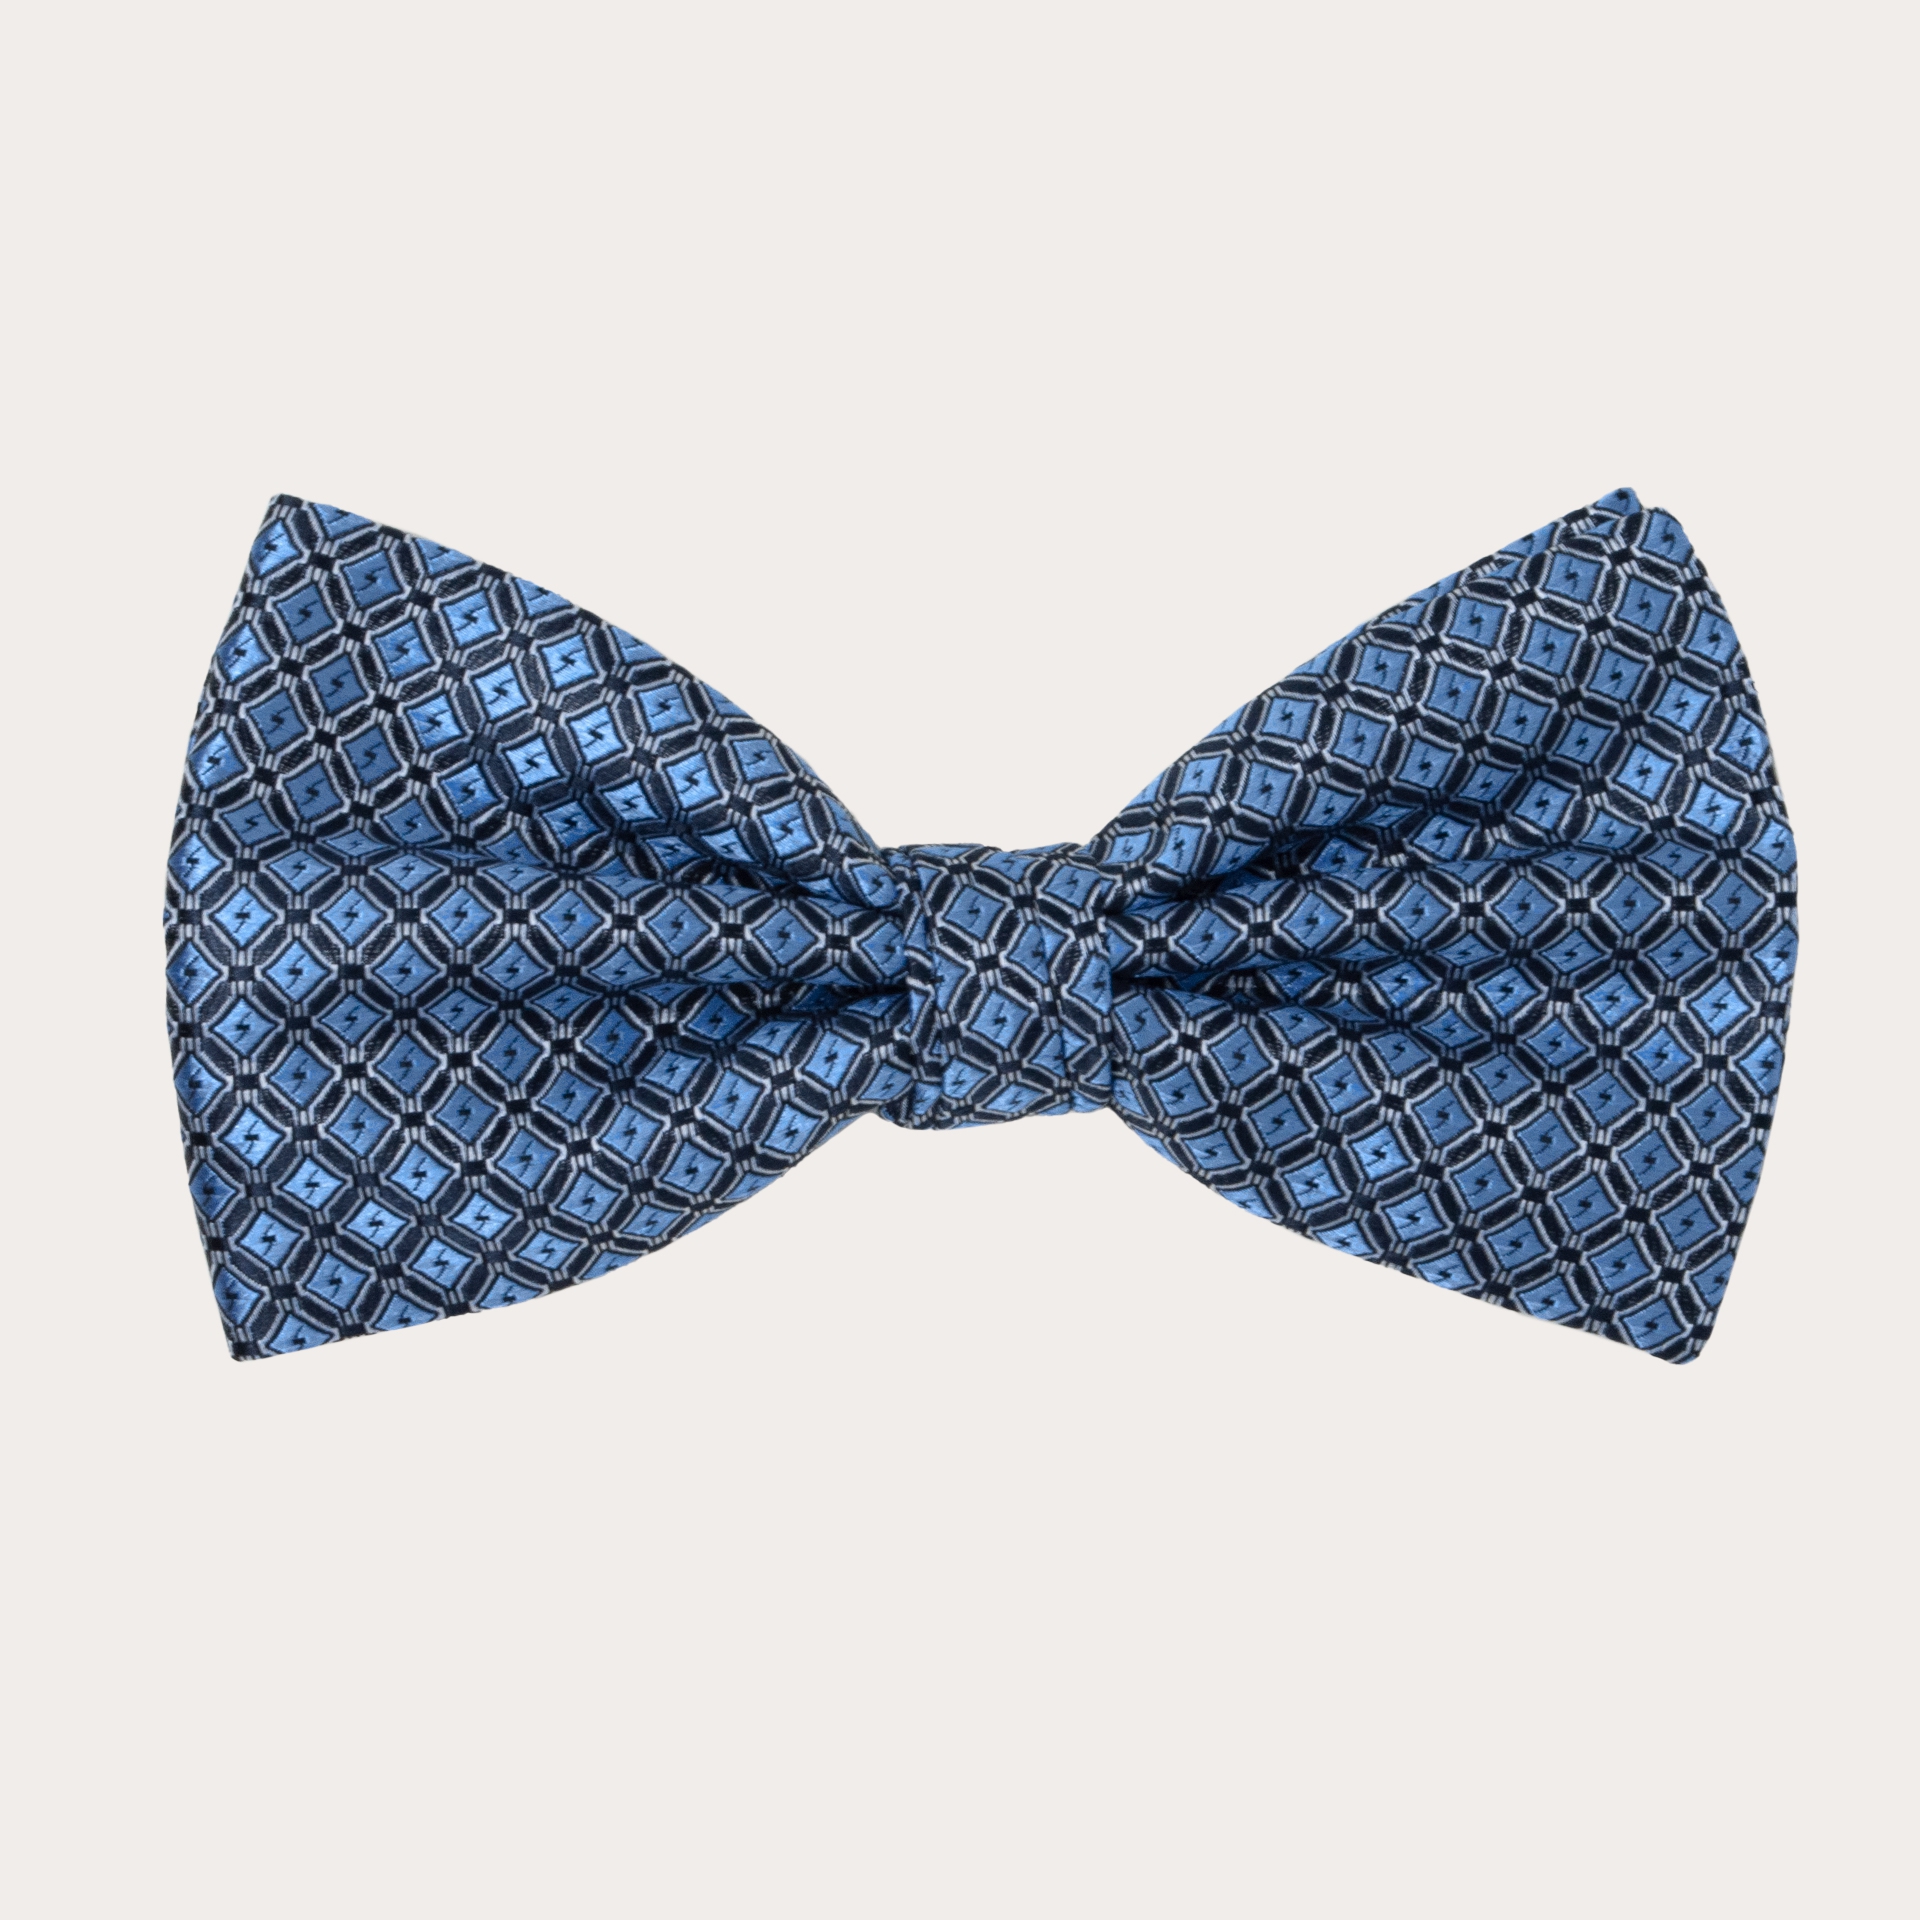 Silk Pre-tied Bow tie, square blue